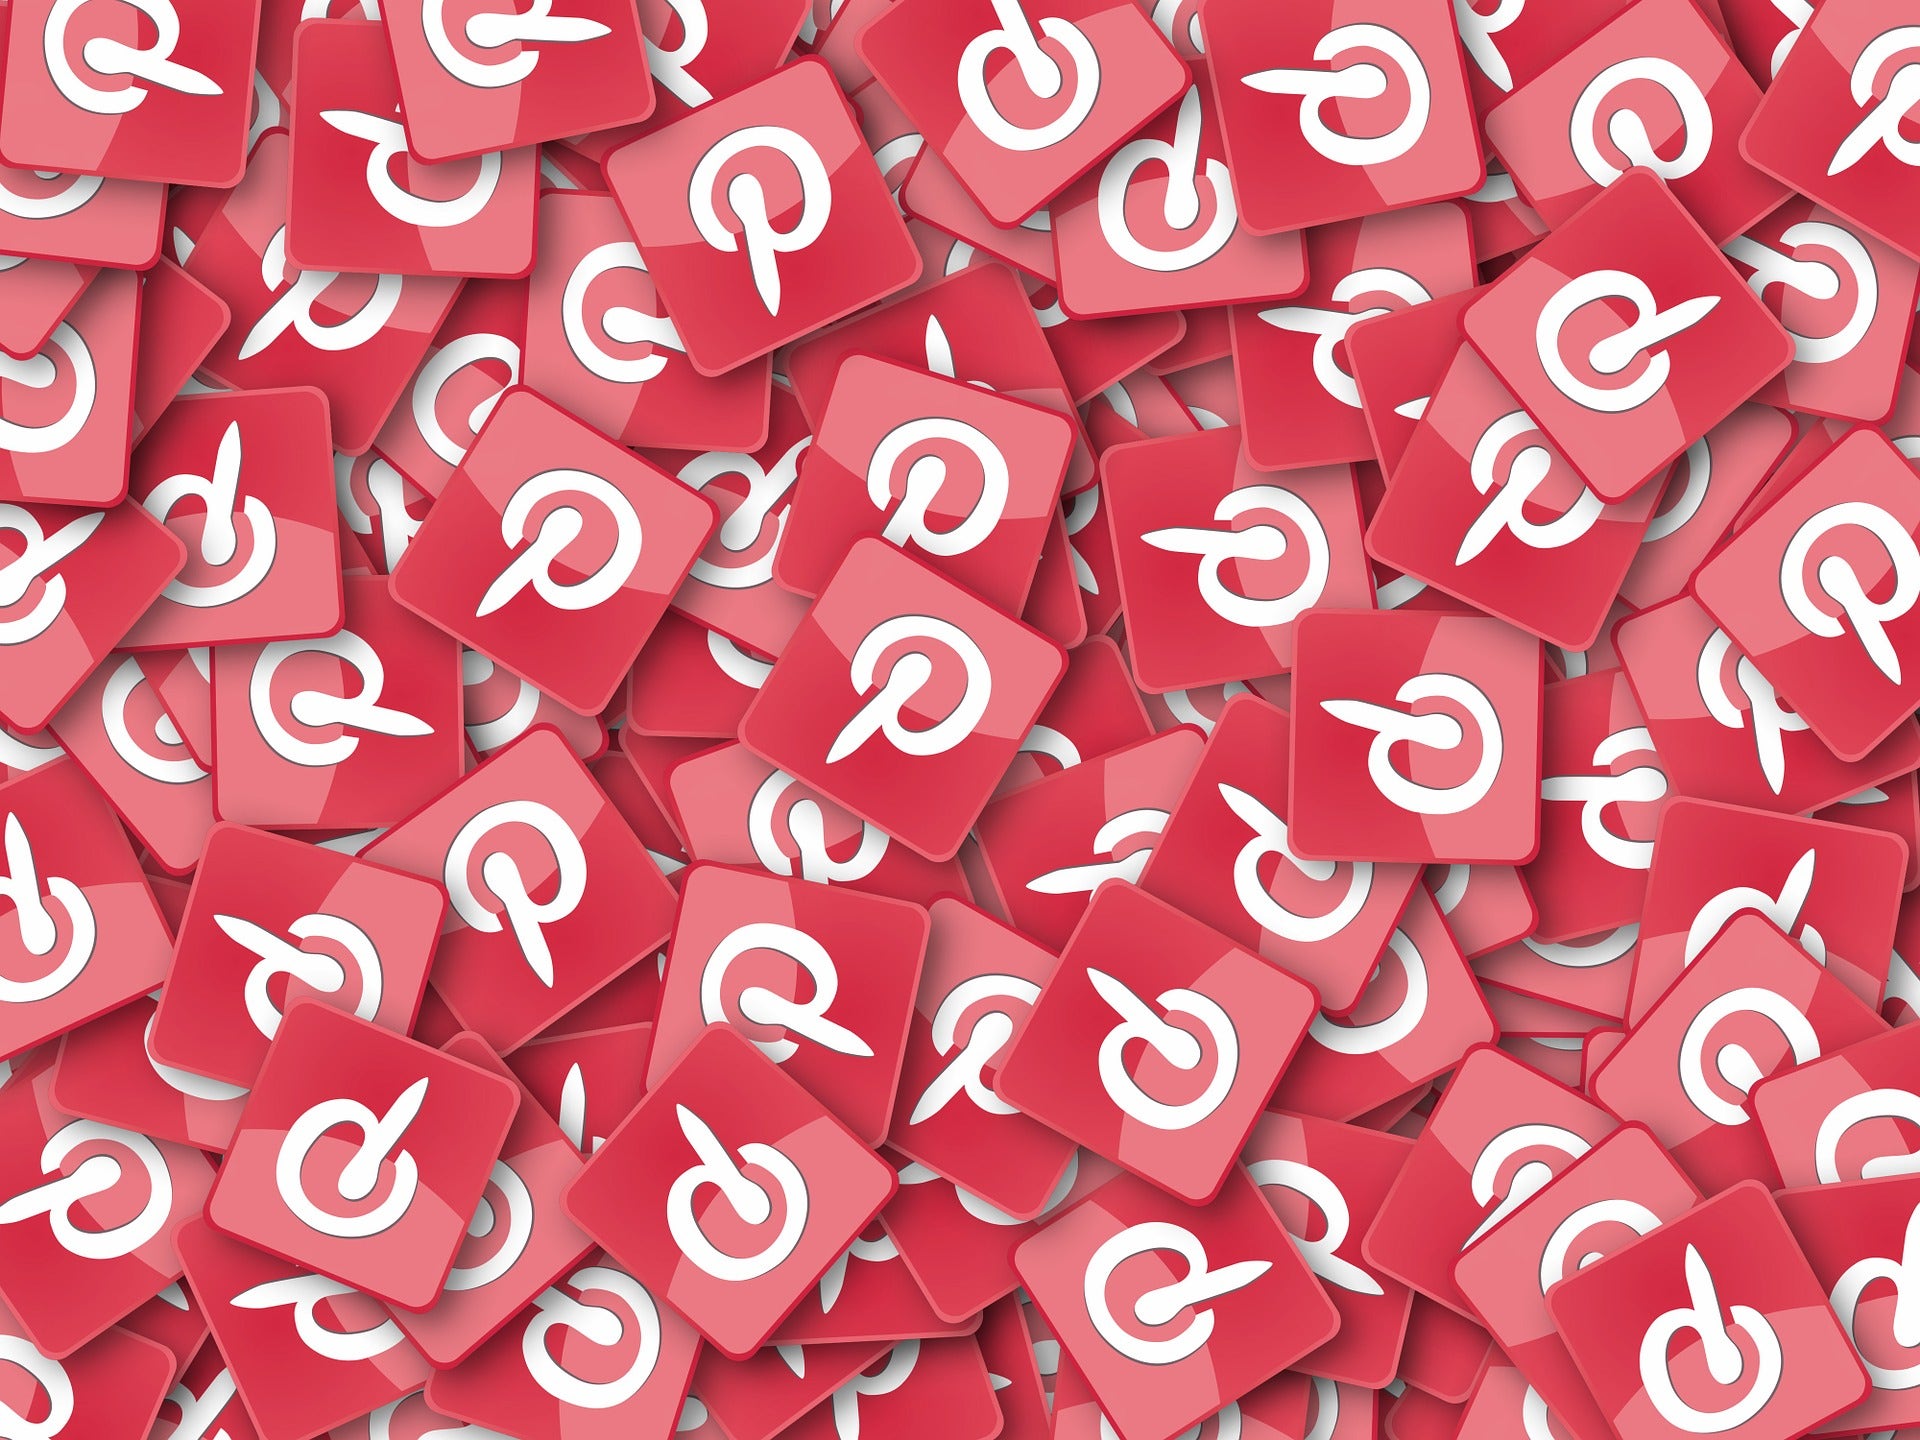 Piper Sandler Pinterest Upgrades Pinterest; Sees 60% Upside